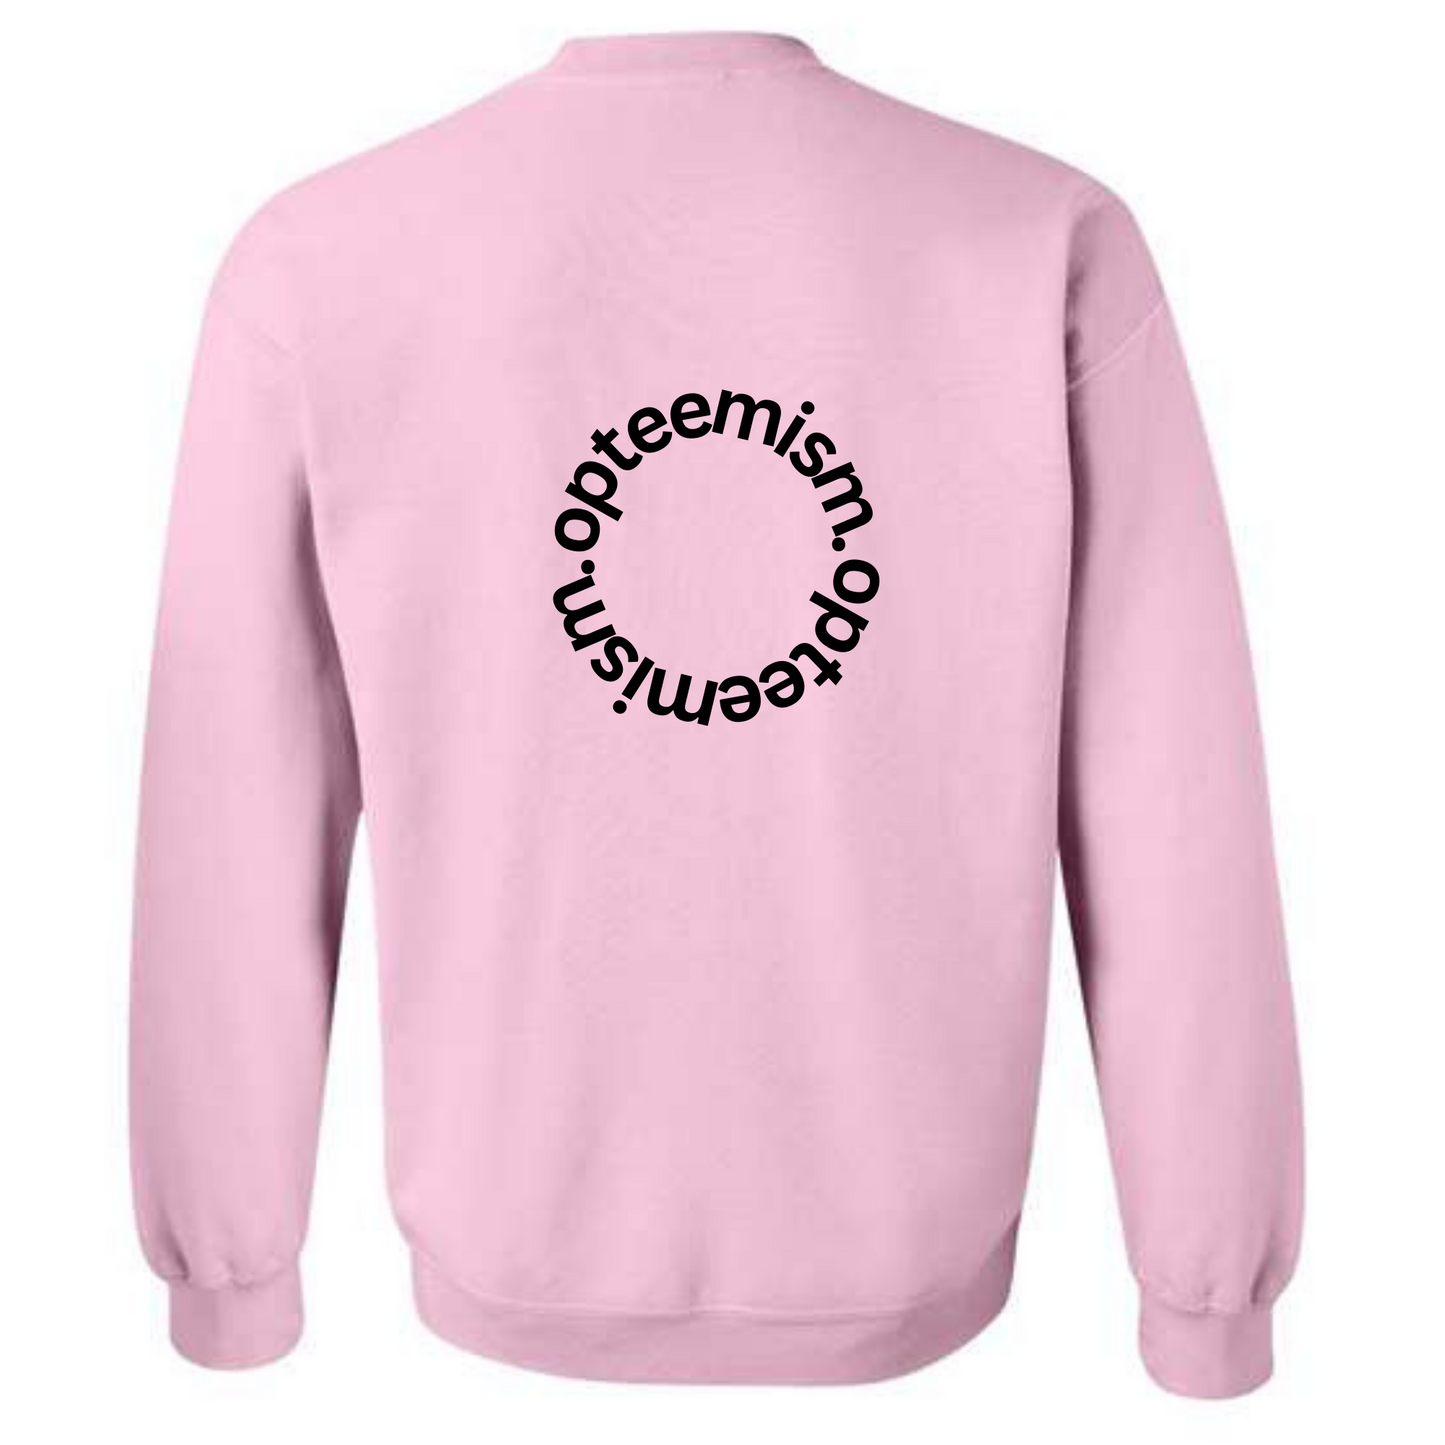 Self Love Club Crew Neck Graphic Sweater